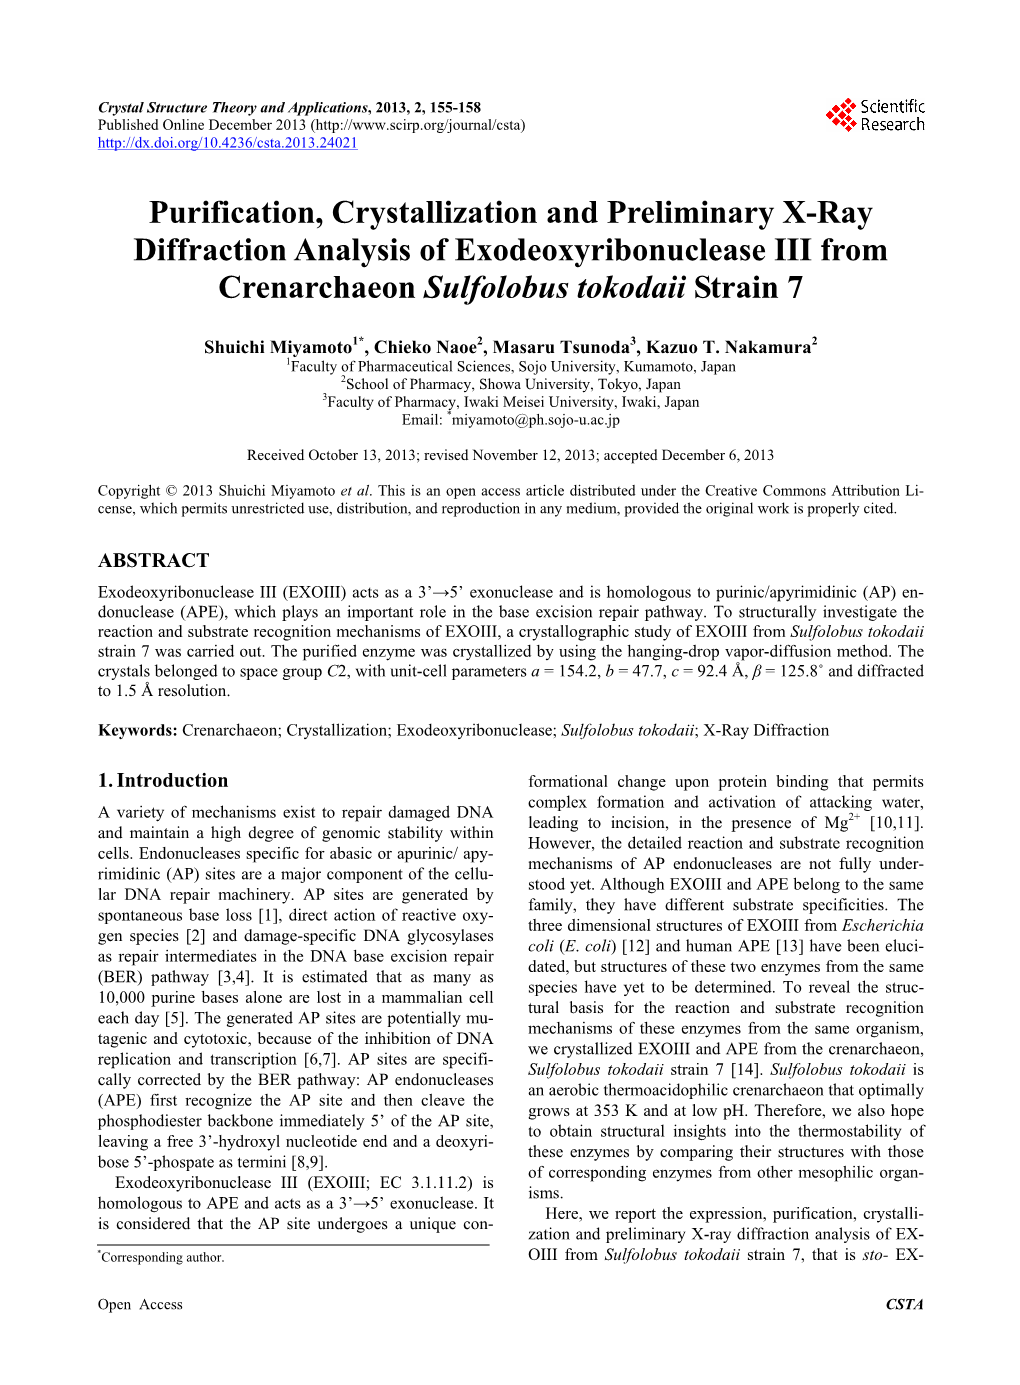 Purification, Crystallization and Preliminary X-Ray Diffraction Analysis of Exodeoxyribonuclease III from Crenarchaeon Sulfolobus Tokodaii Strain 7